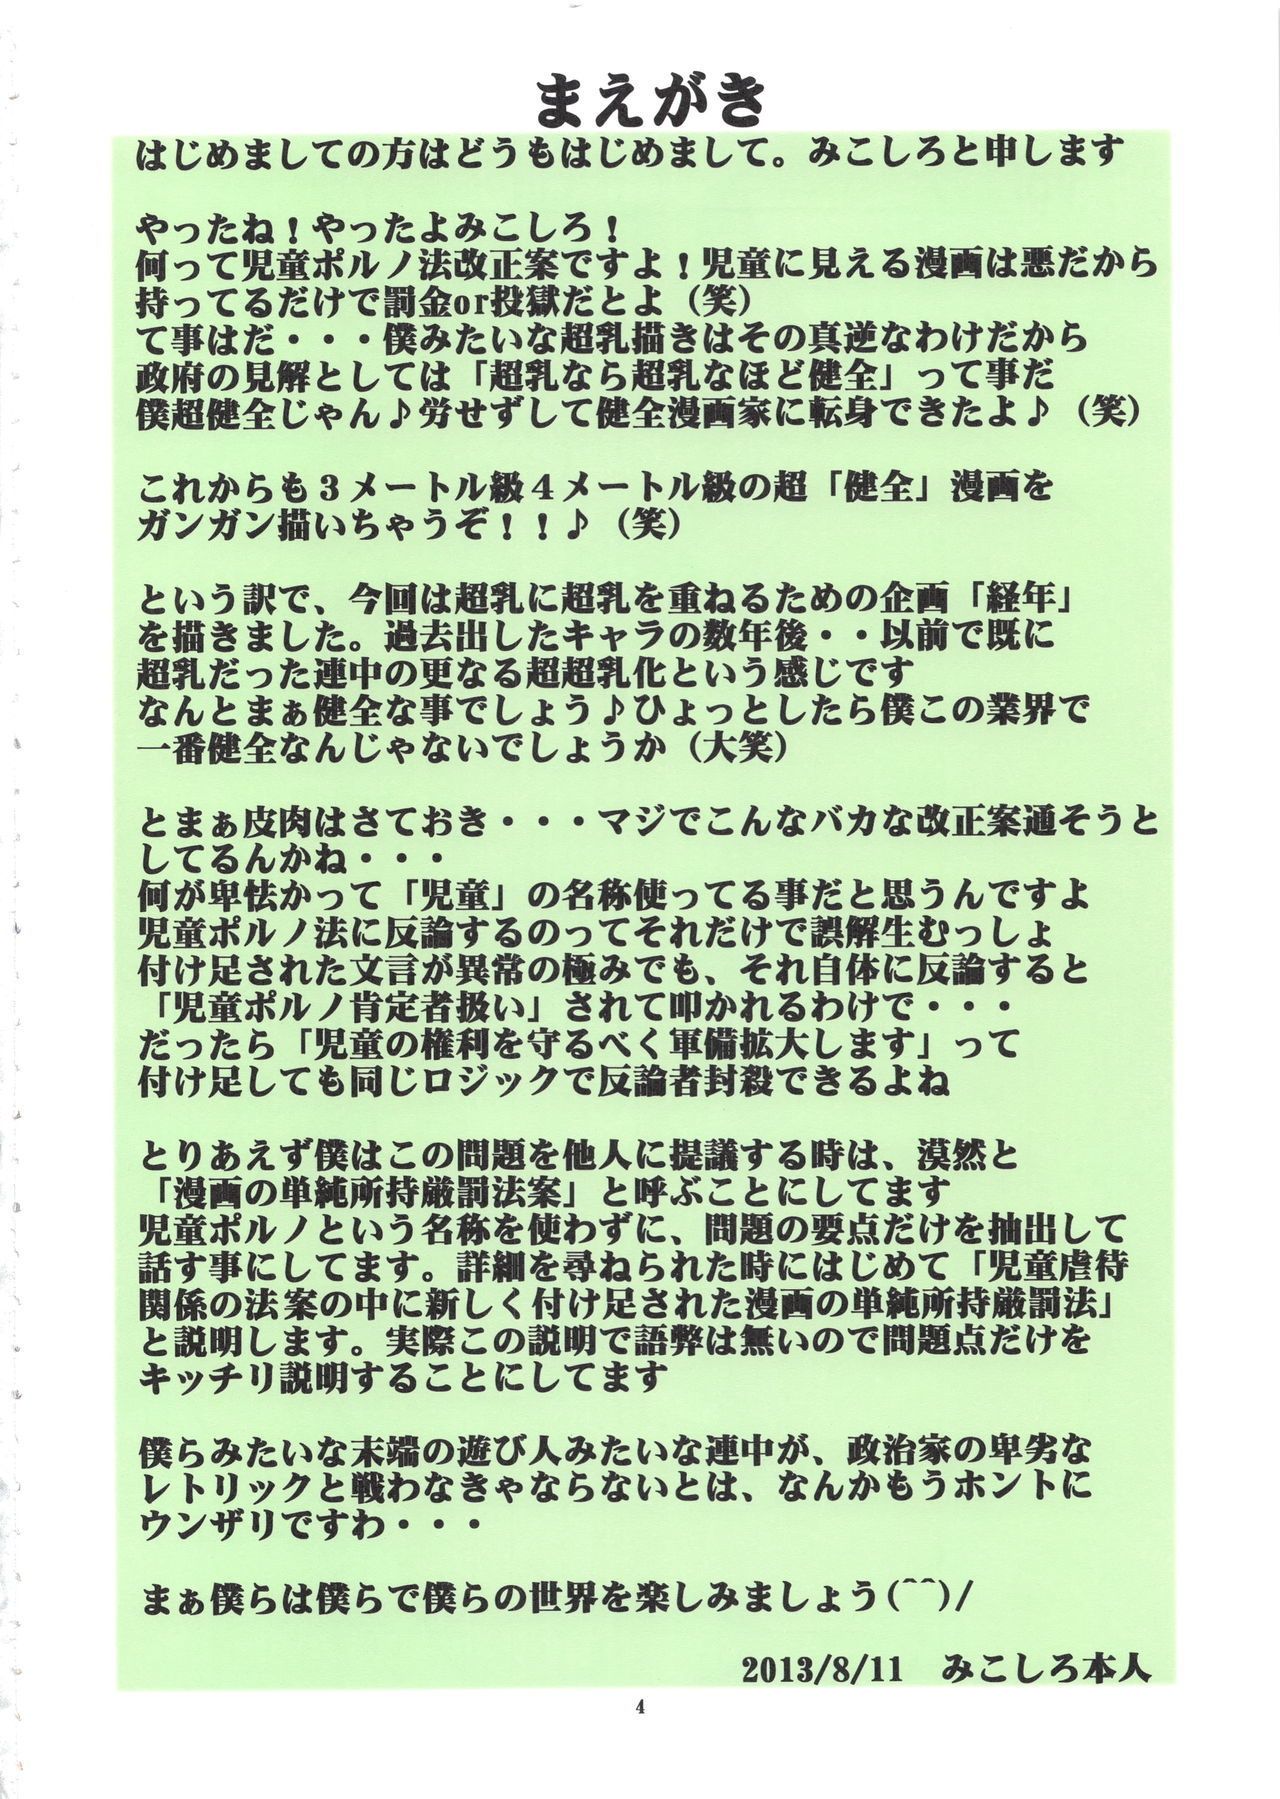 (c84) algolagnia (mikoshiro honnin) st. margarida gakuen colorful! vol. 15 proibido traduções